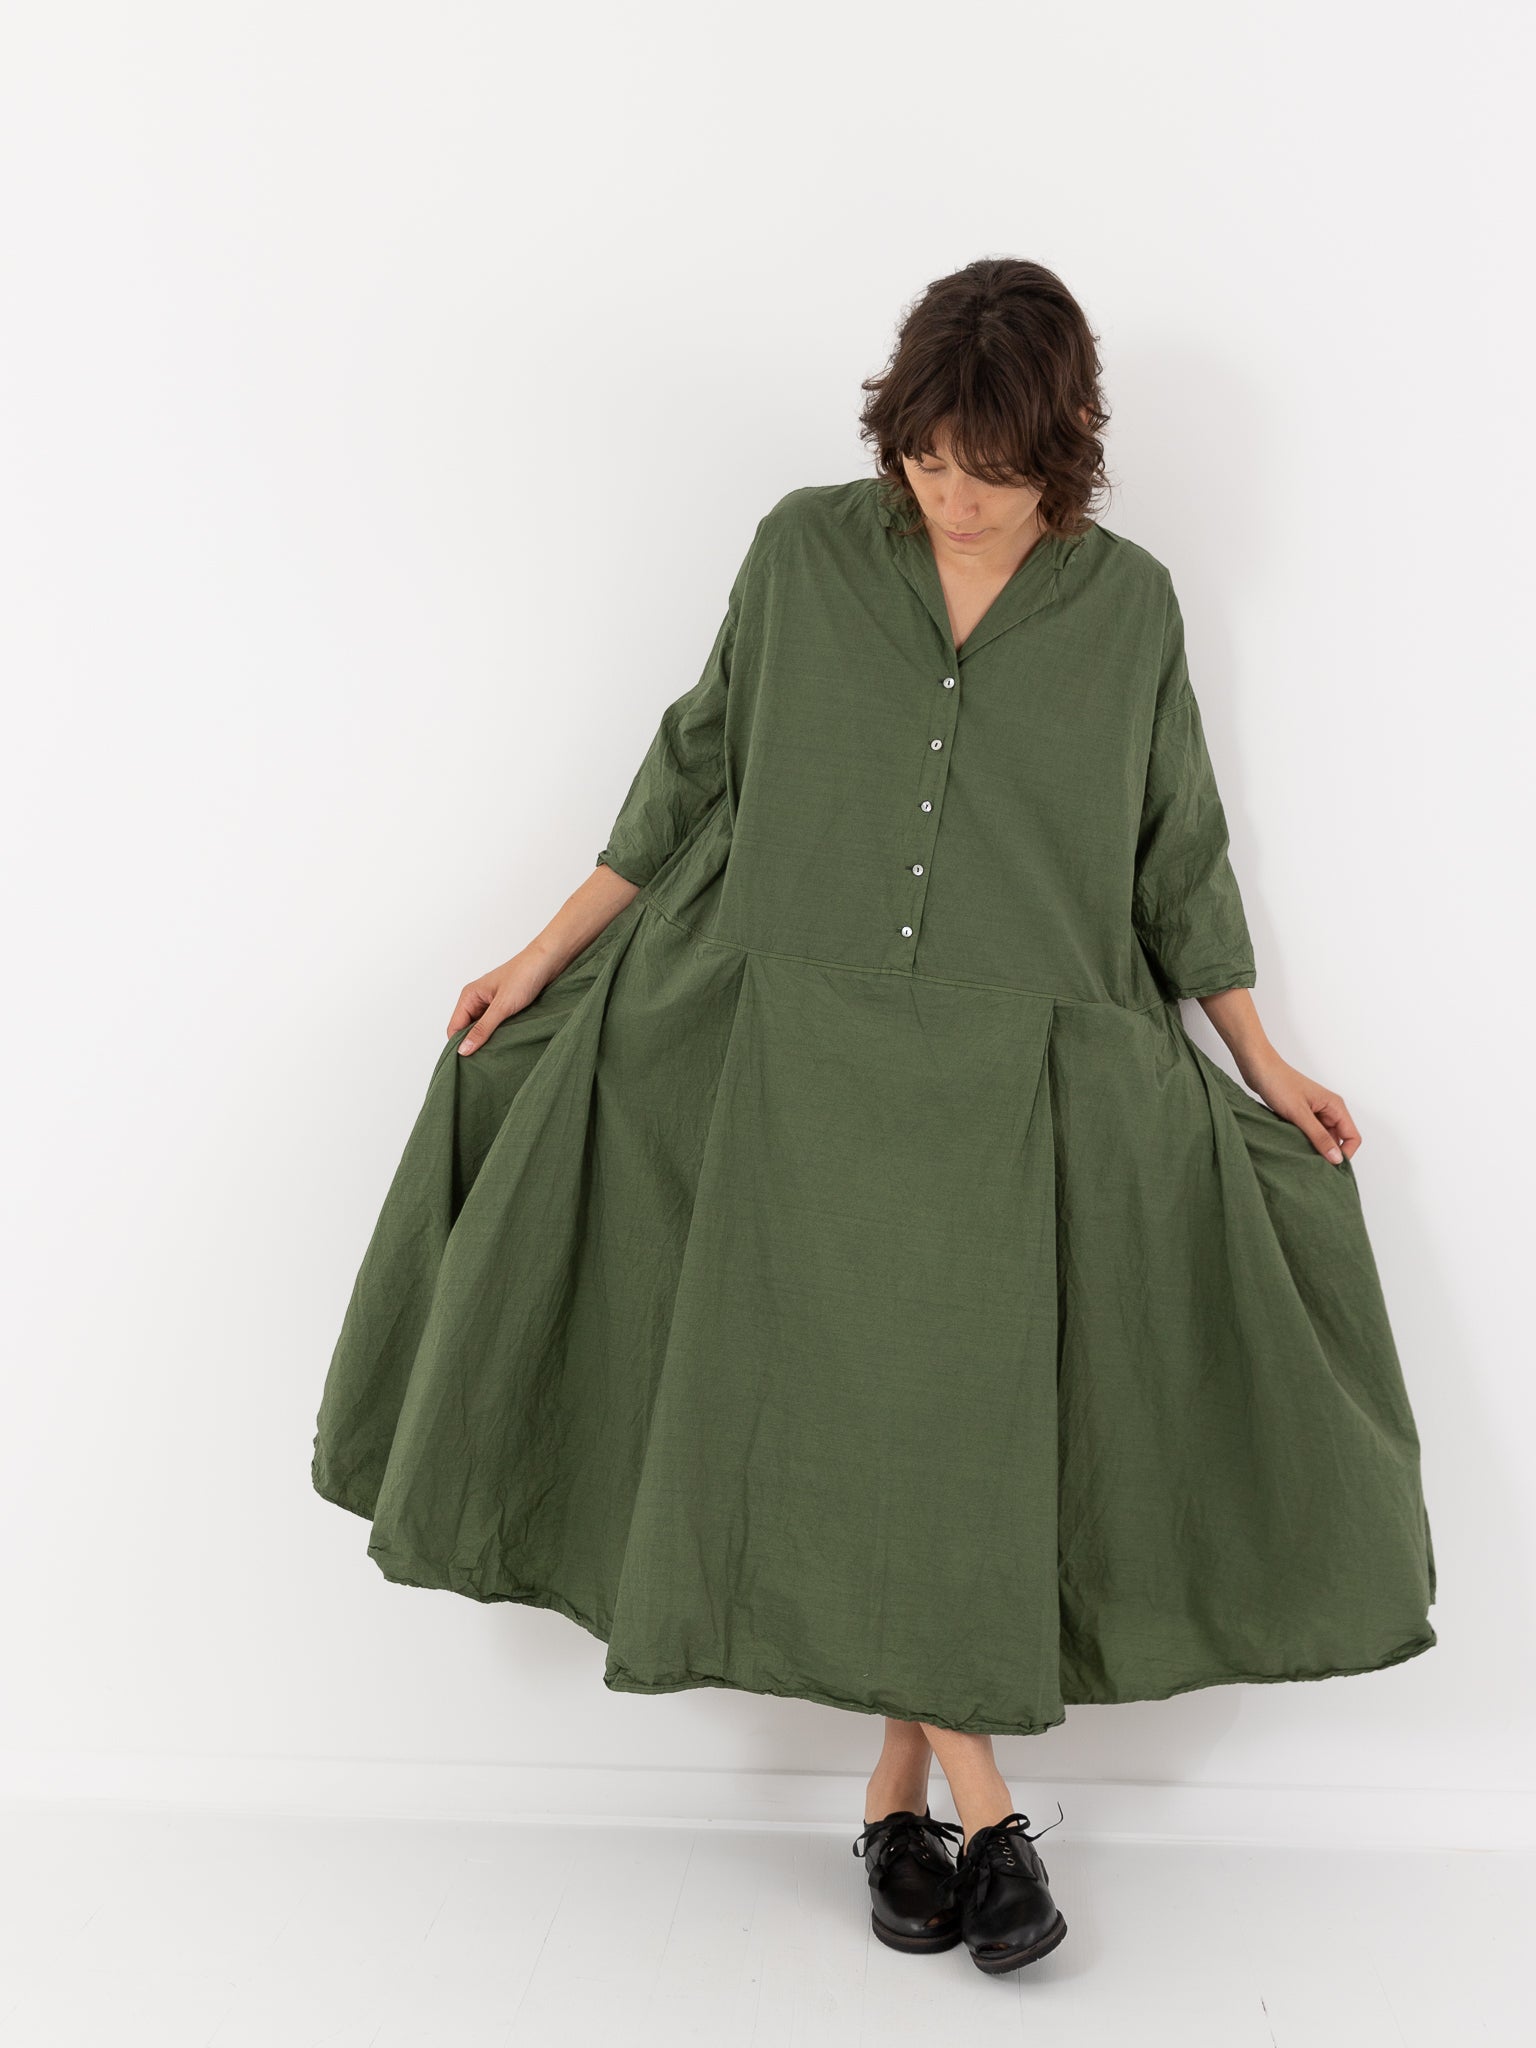 Album Di Famiglia Collar Dress, Green - Worthwhile, Inc.